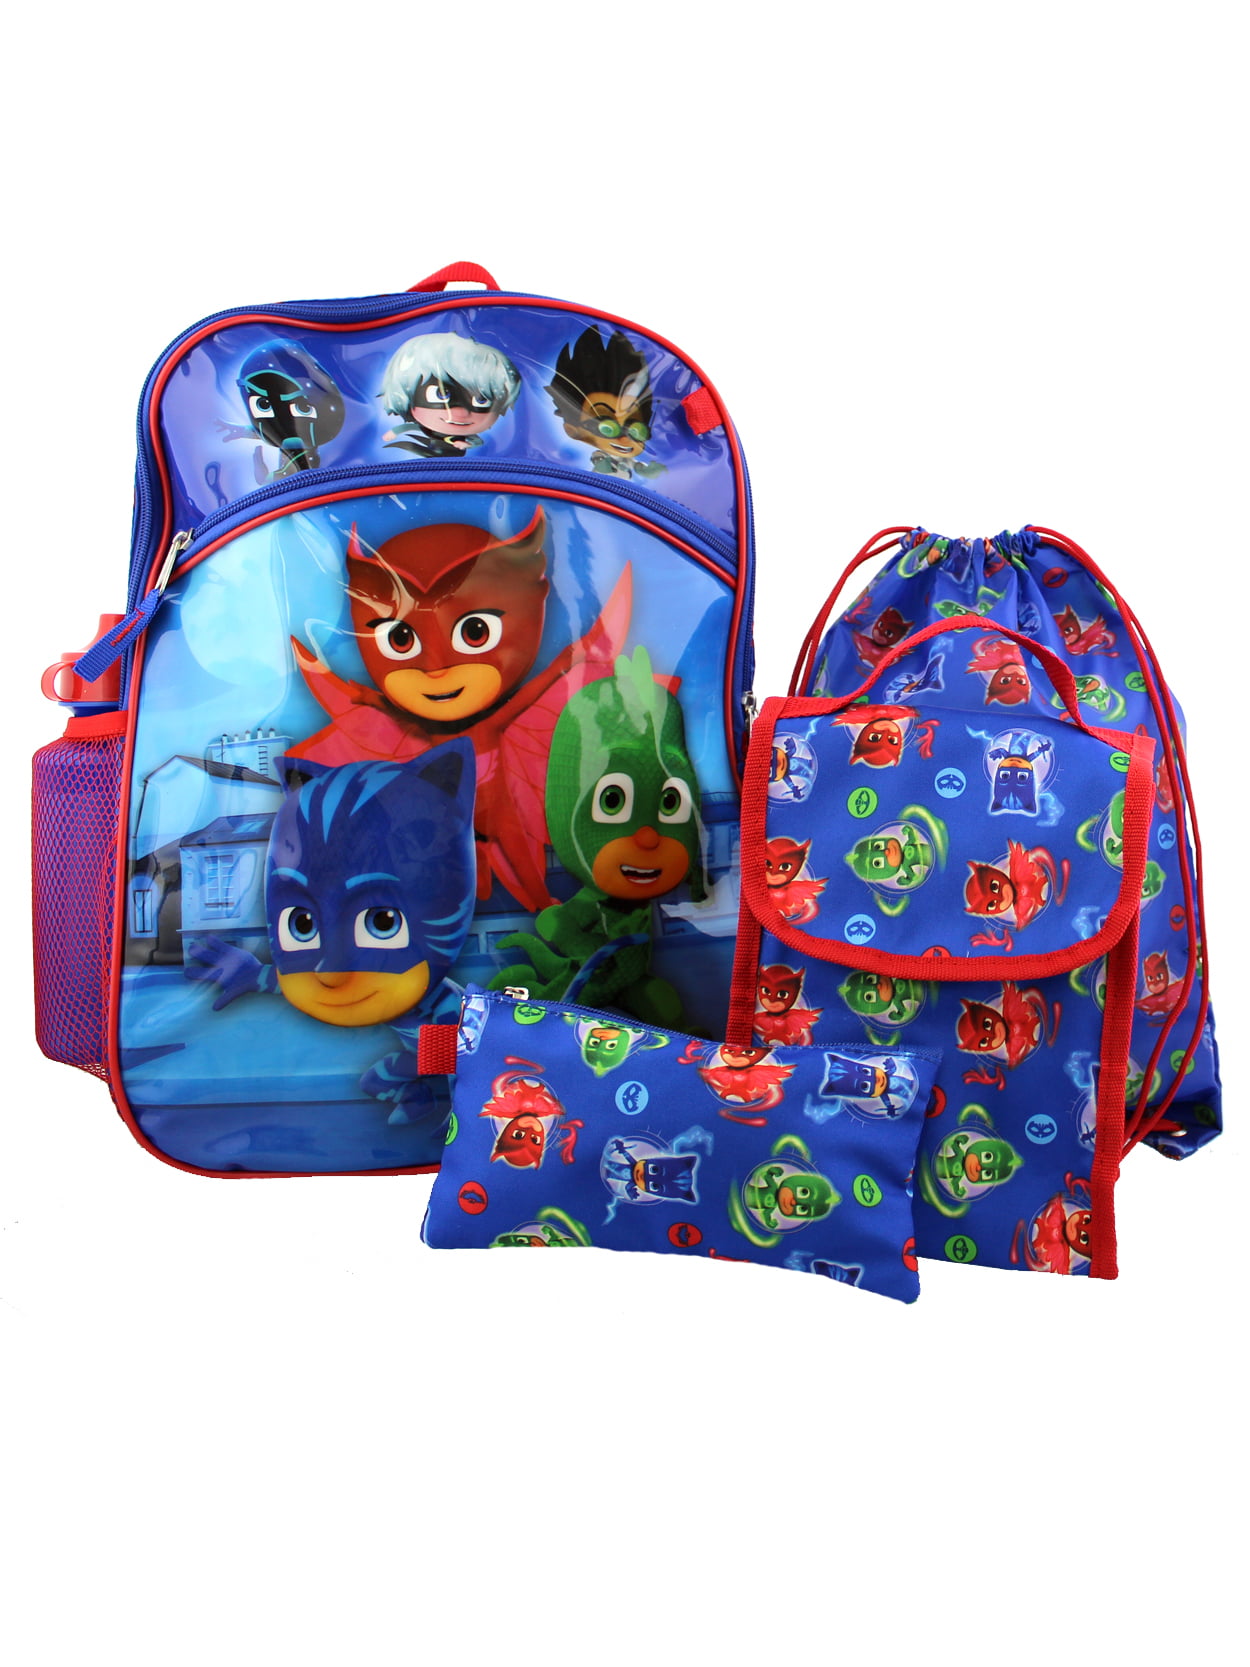 PJ MASKS Backpack Rucksack Junior School Bag Kids 